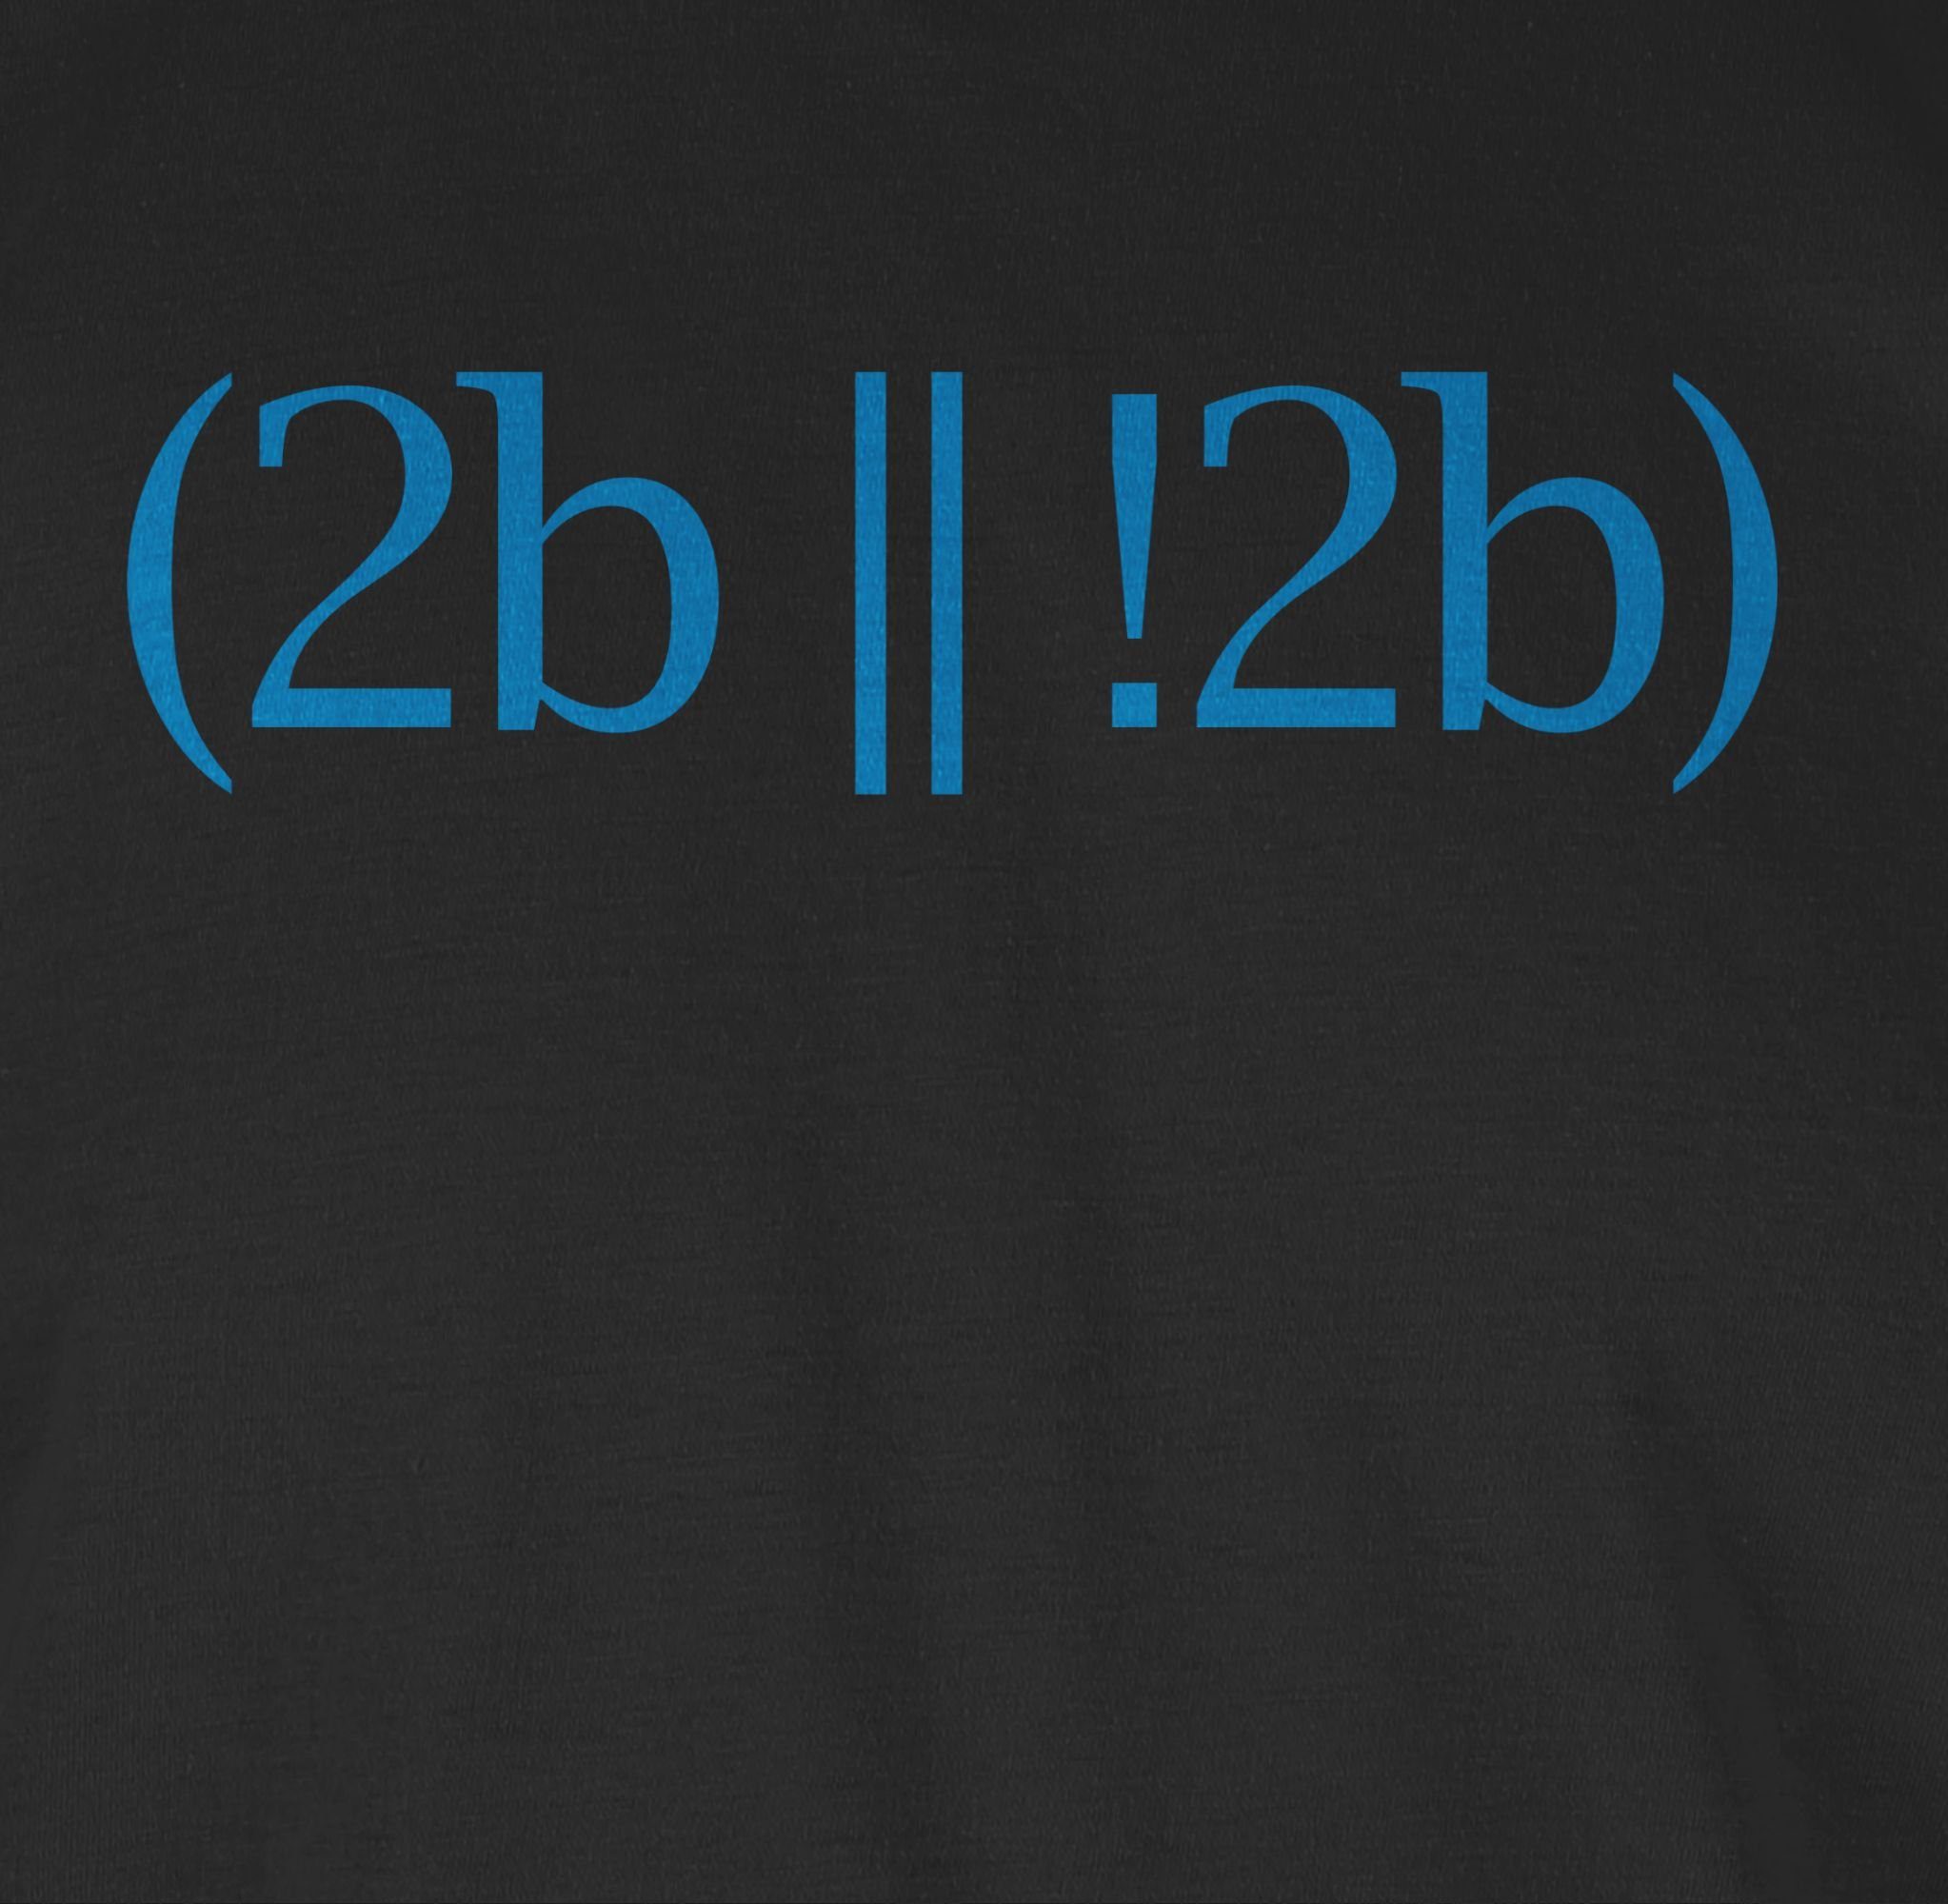 Shirtracer T-Shirt To or not Schwarz 01 be be Programmierer to Geschenke